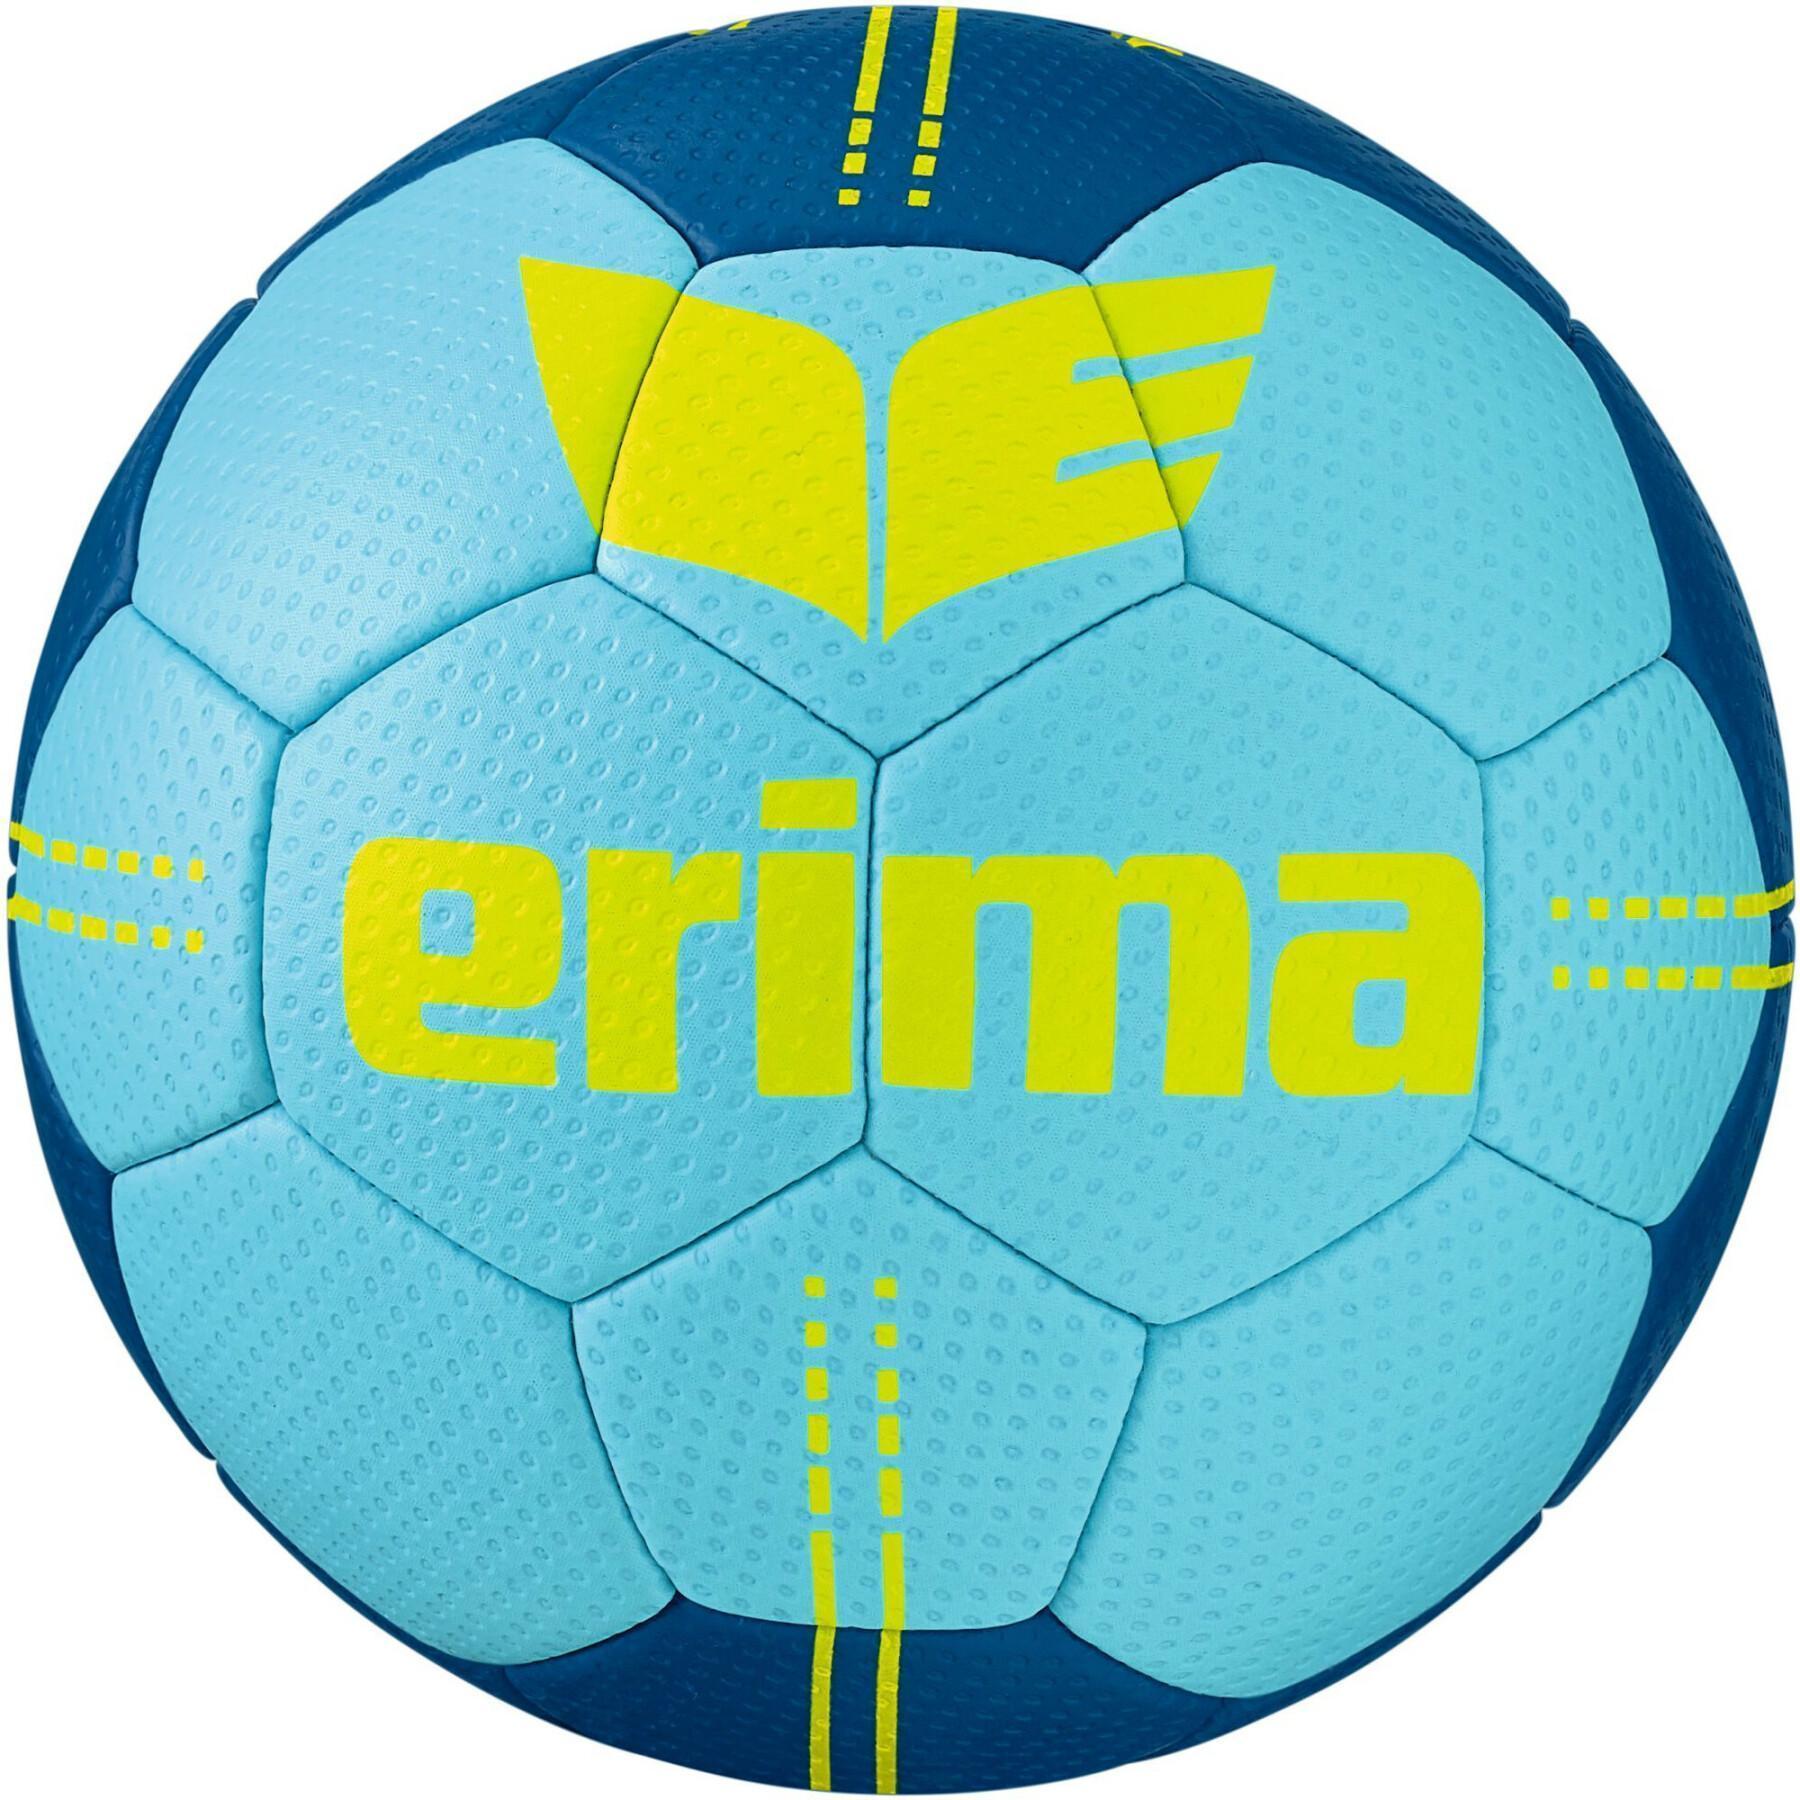 Ballon enfant Erima Pure Grip